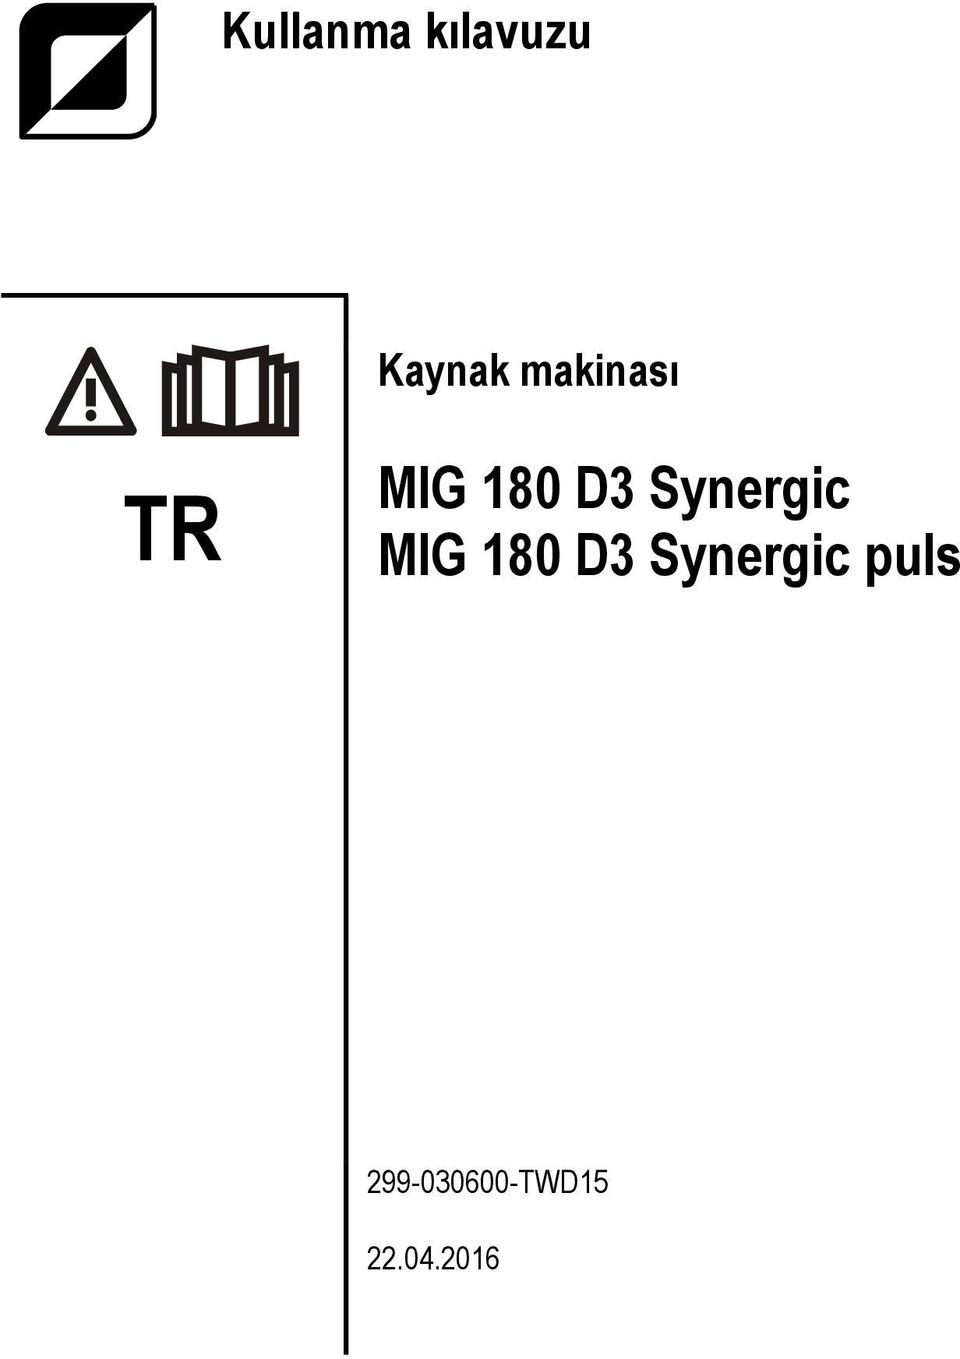 MIG 180 D3 Synergic